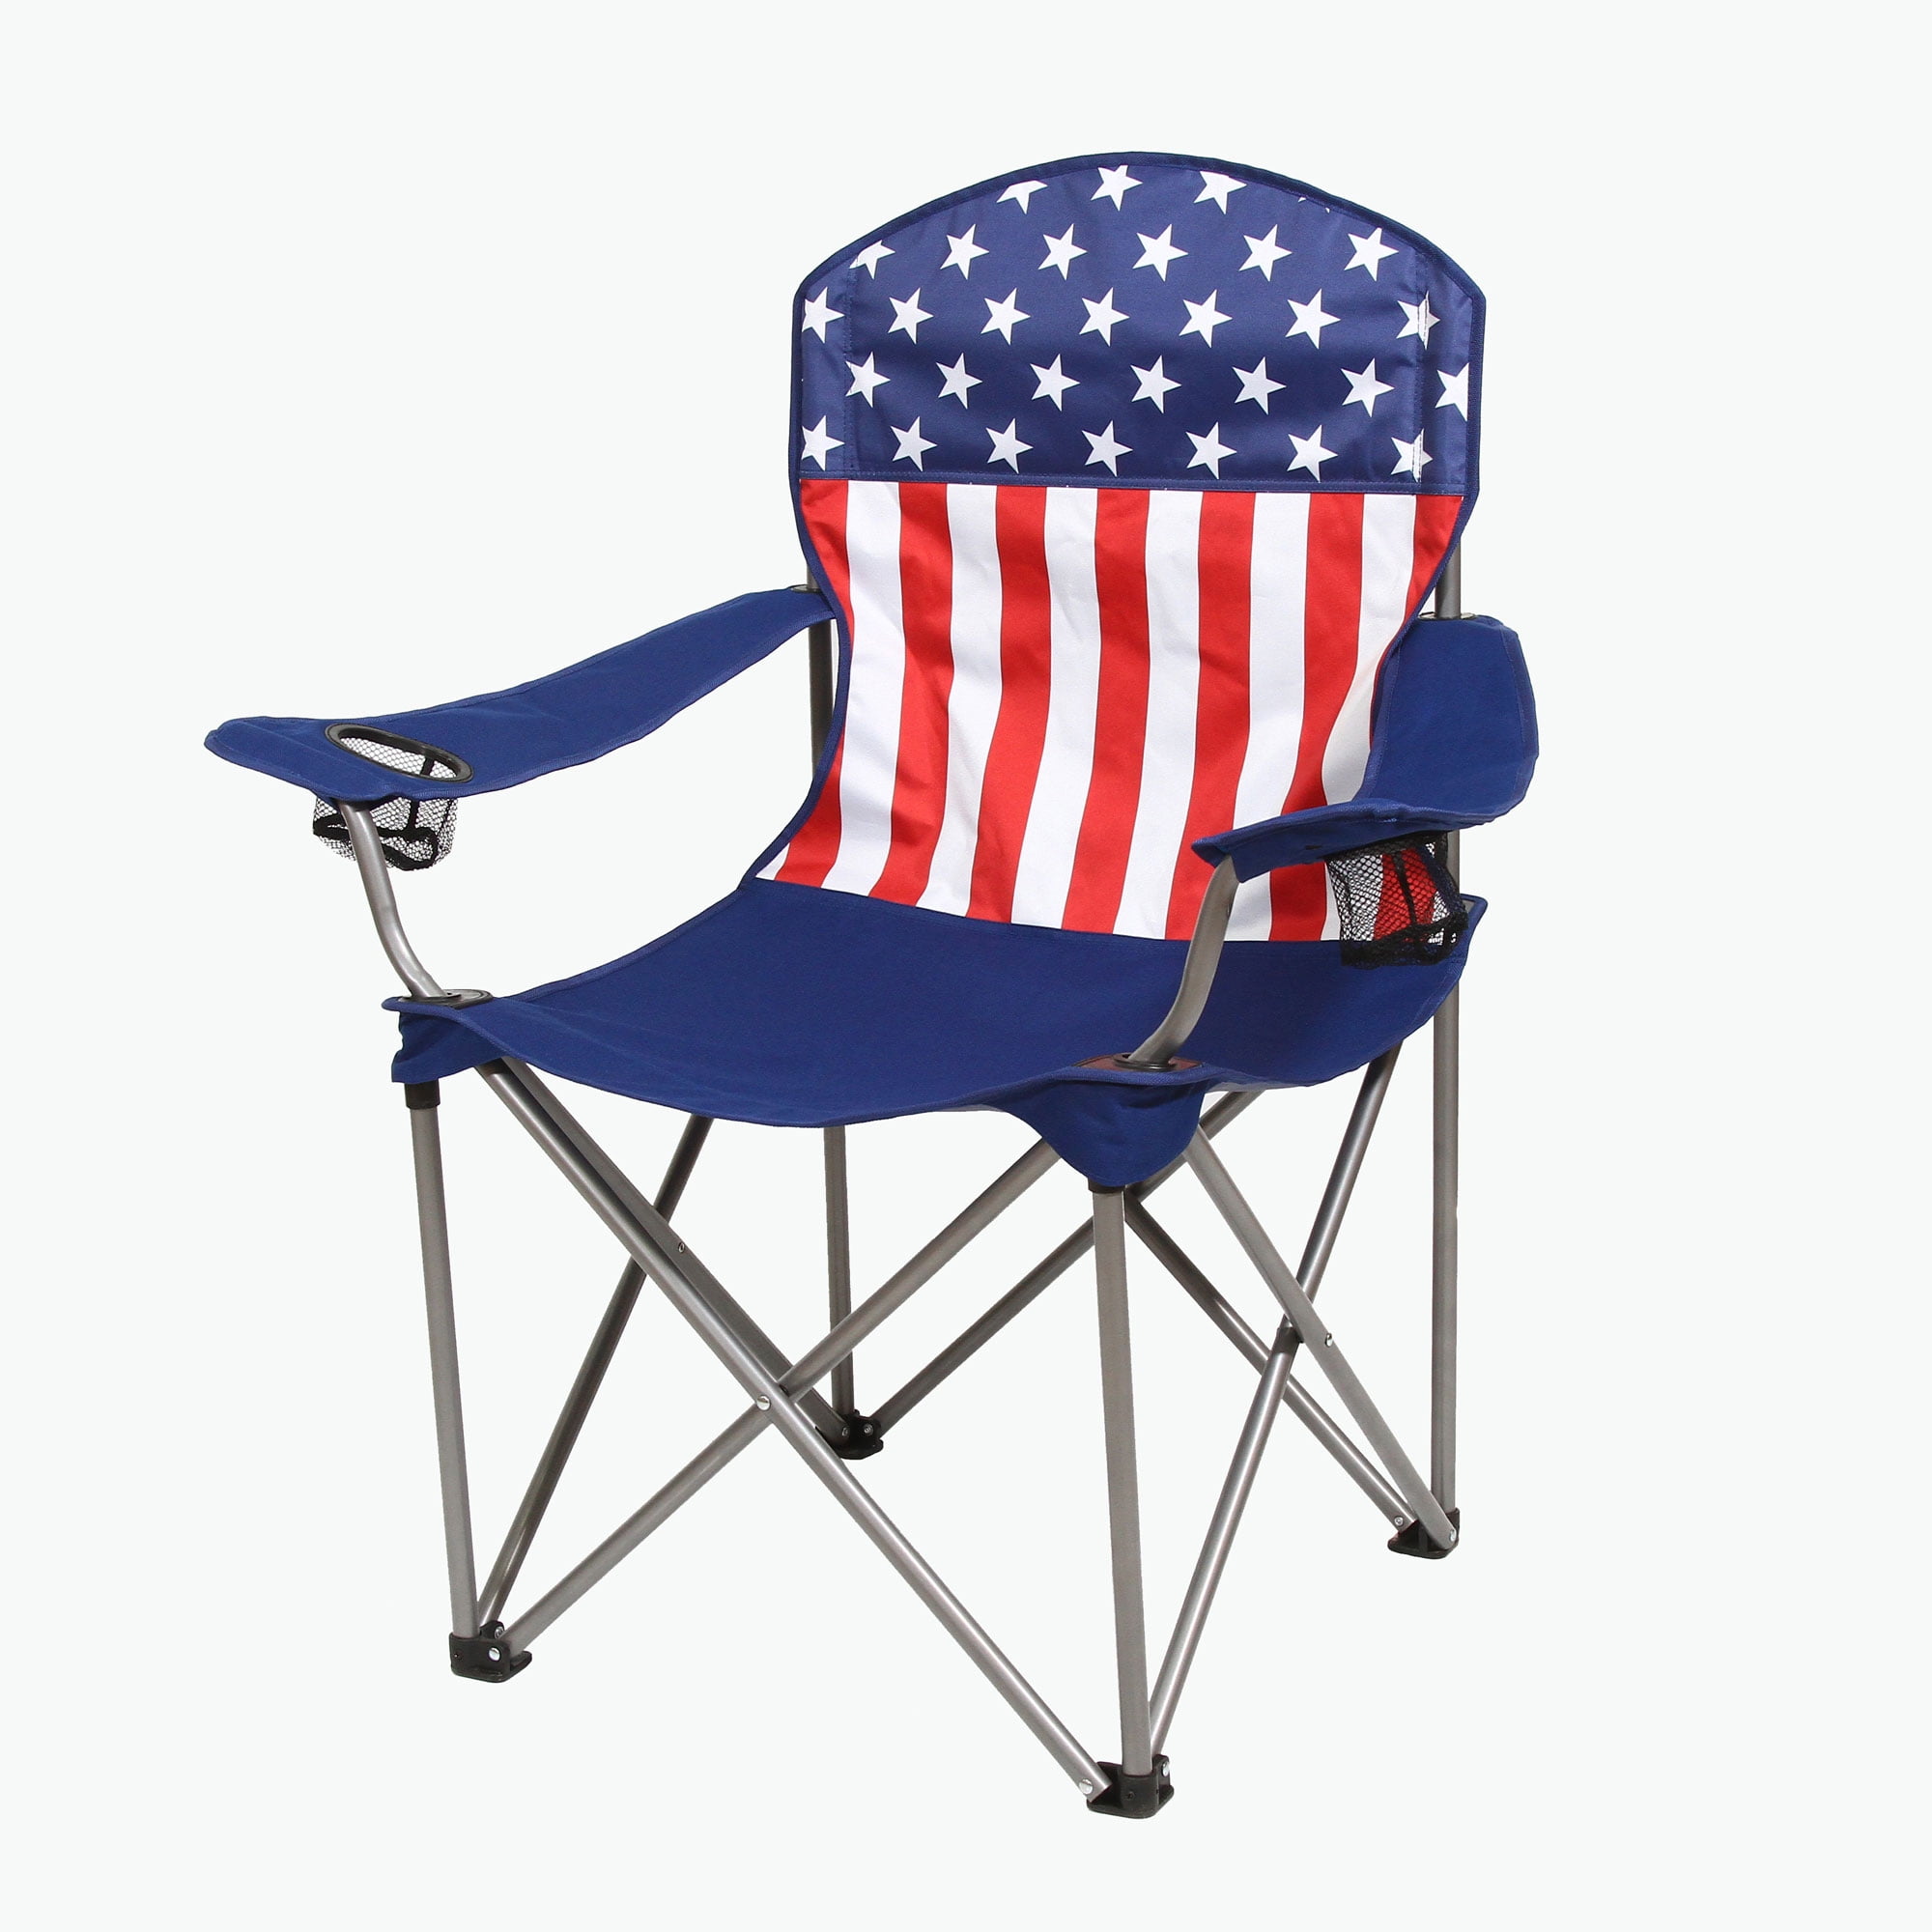 kamp-rite outdoor camping beach patio sports folding quad lawn chair